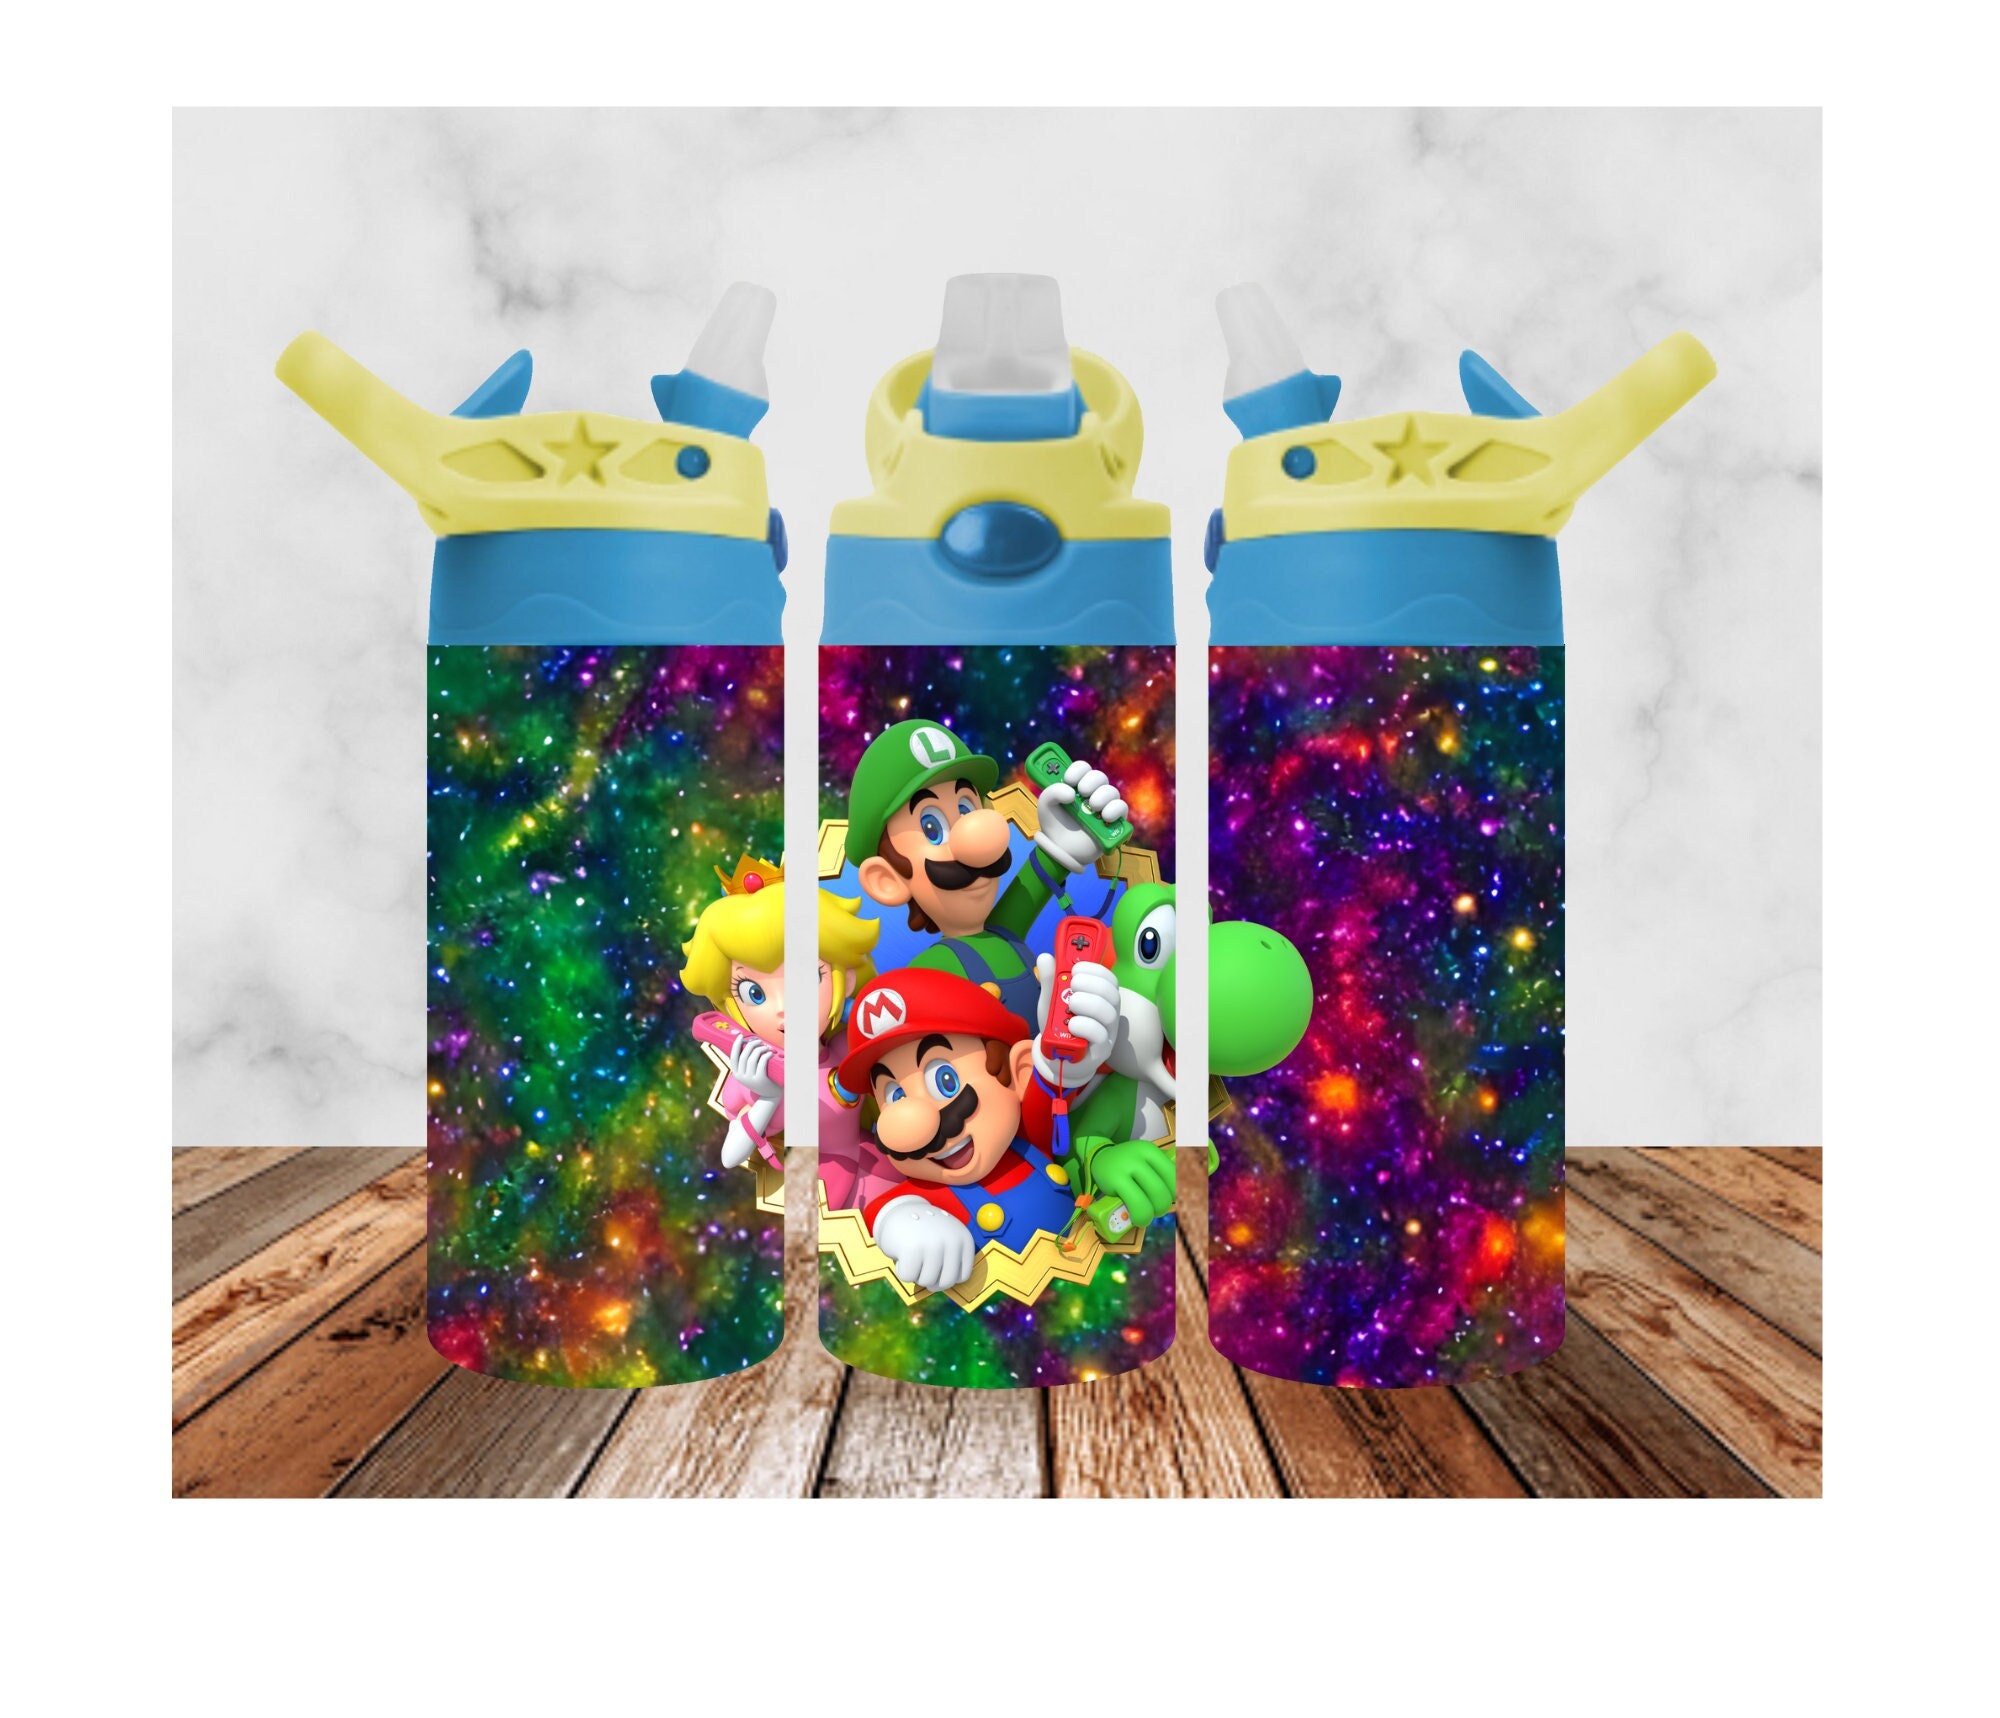 Super Mario Hydro Bottle - Custom Tumblers - Jess's Custom